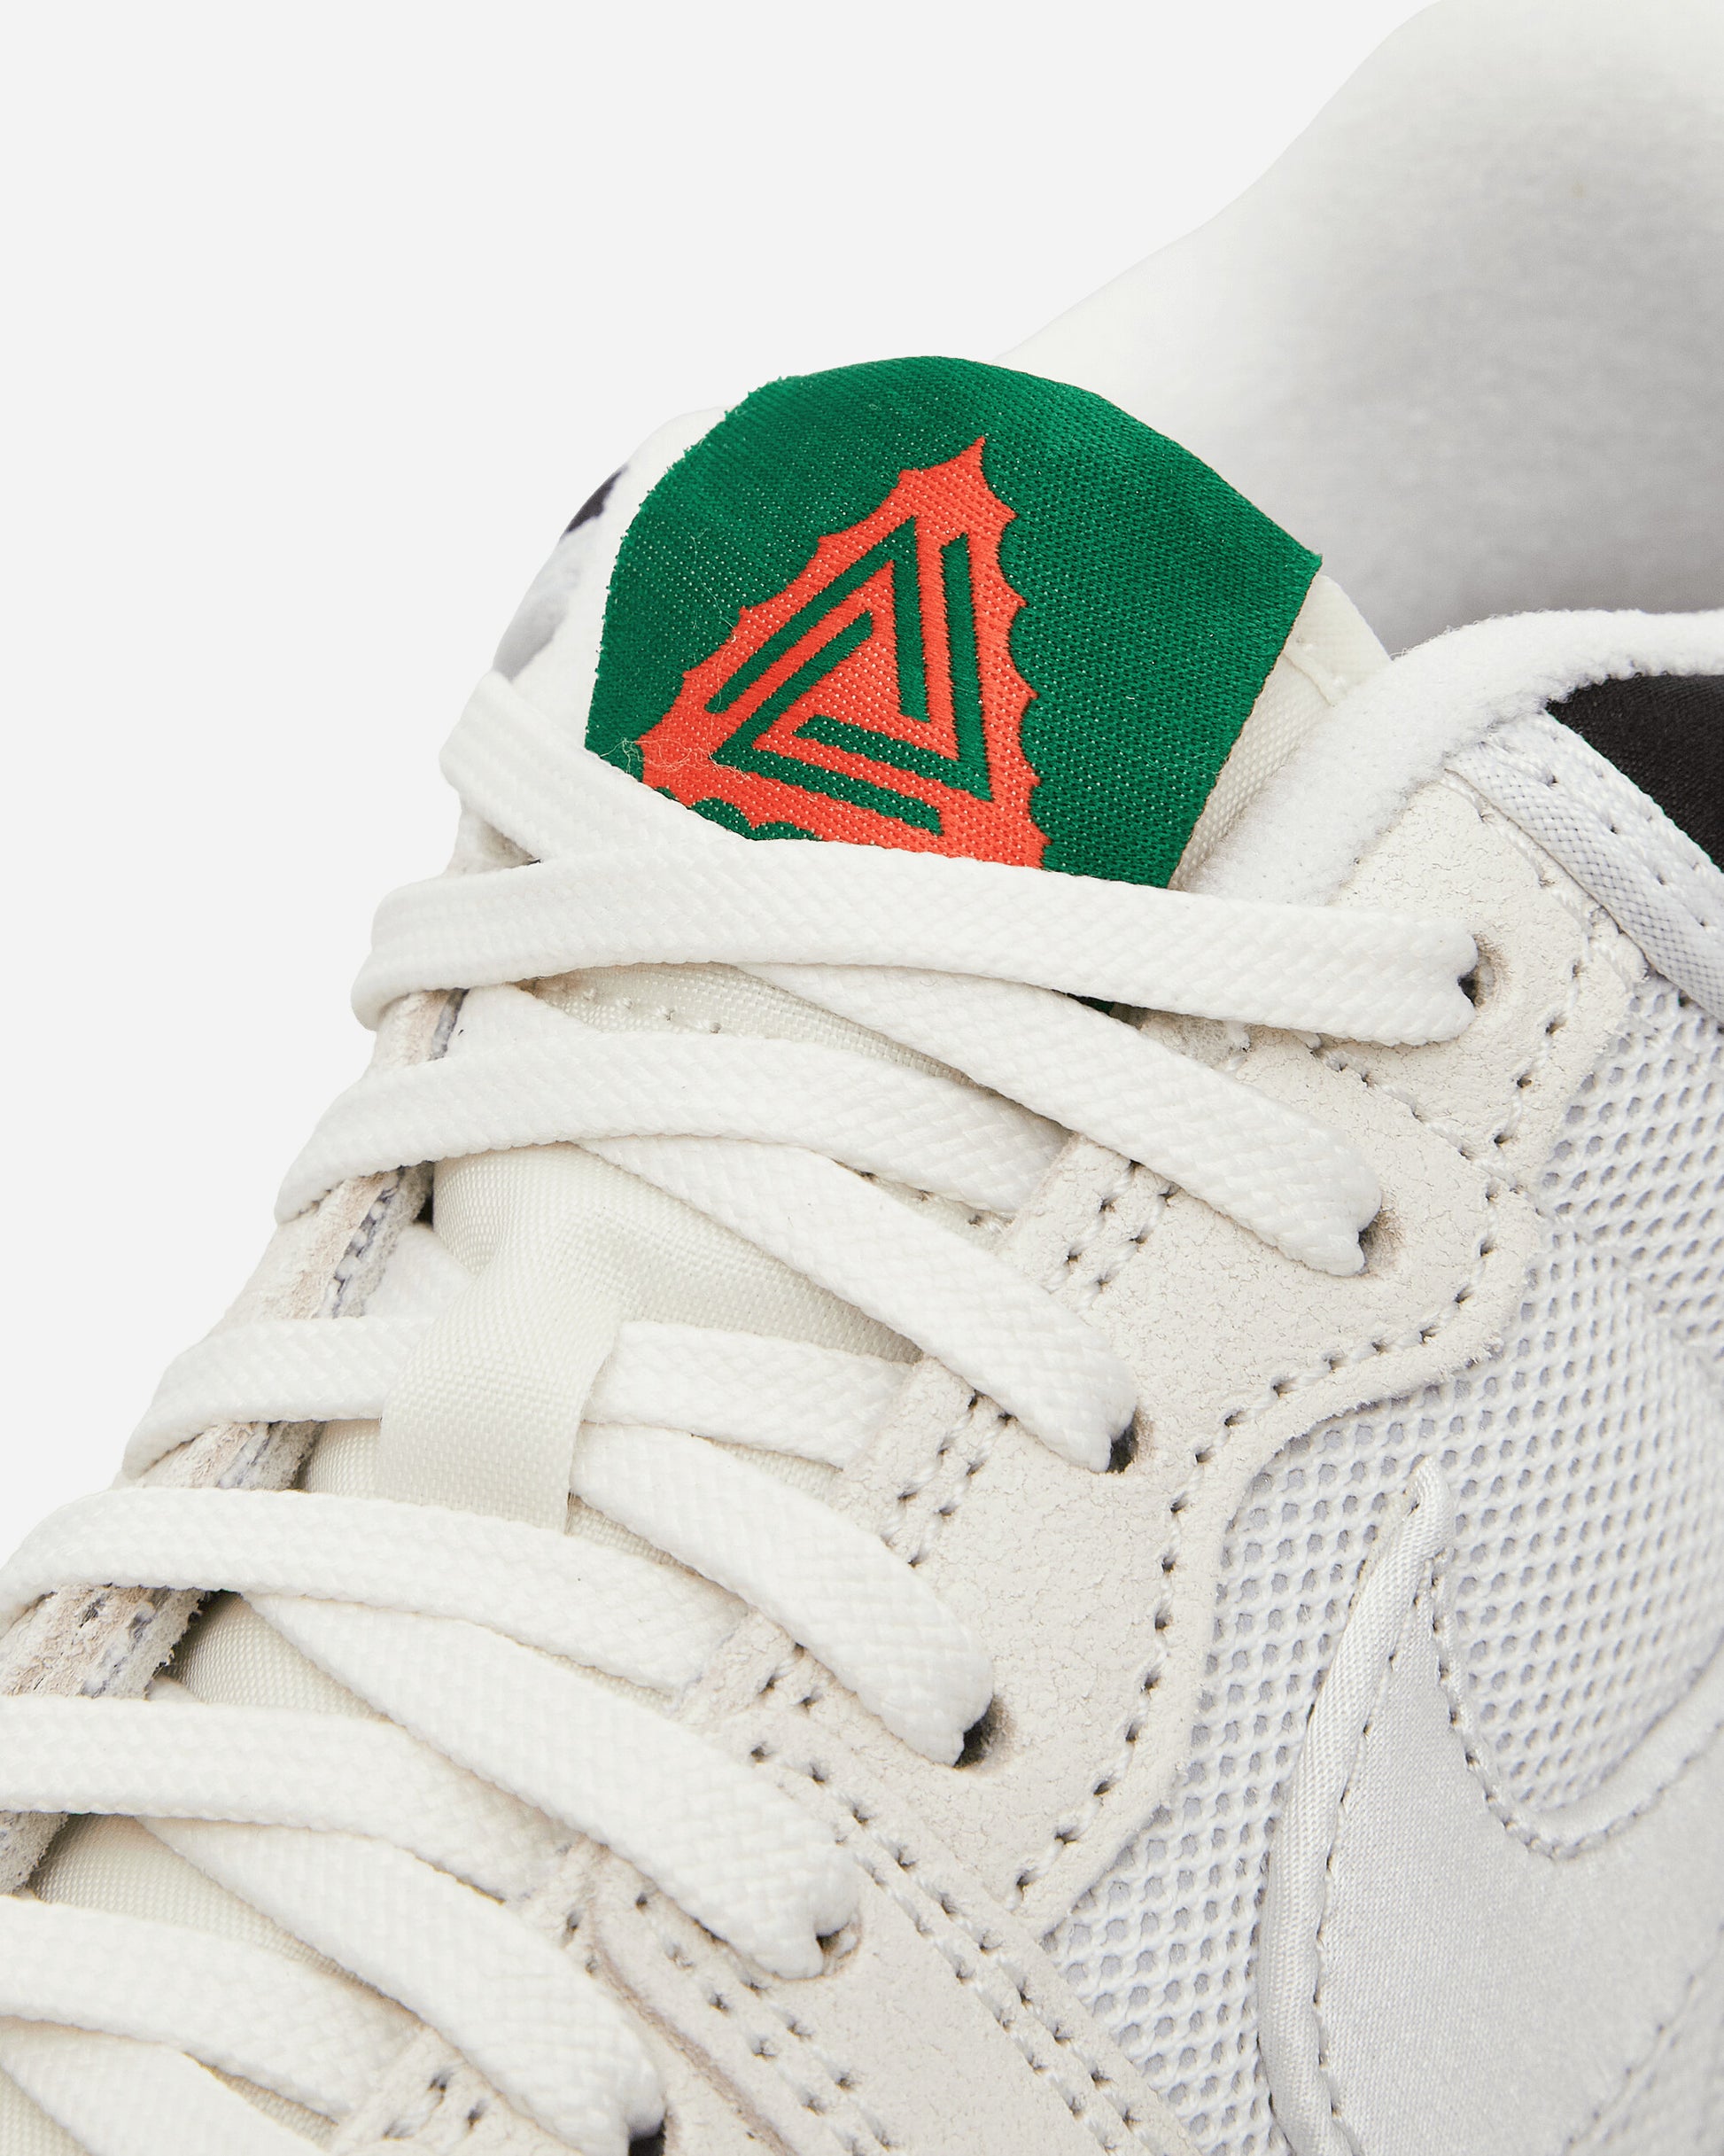 Nike Nike Attack Sp Summit White/White/Pine Green Sneakers Low DZ4636-100